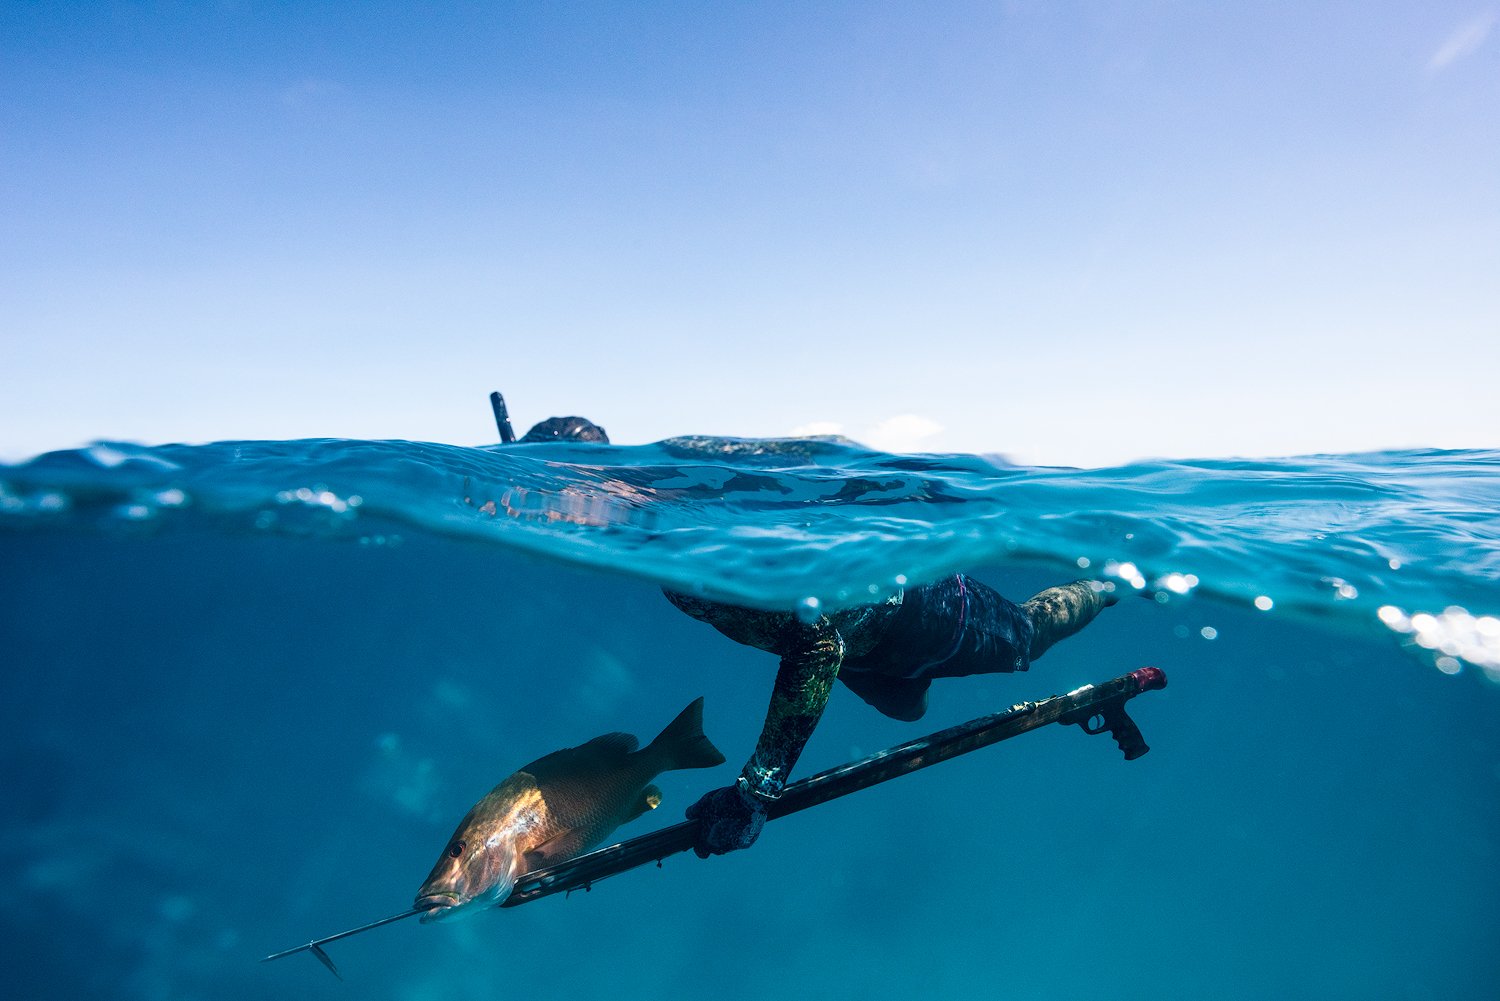 Belizean freediver with fish.